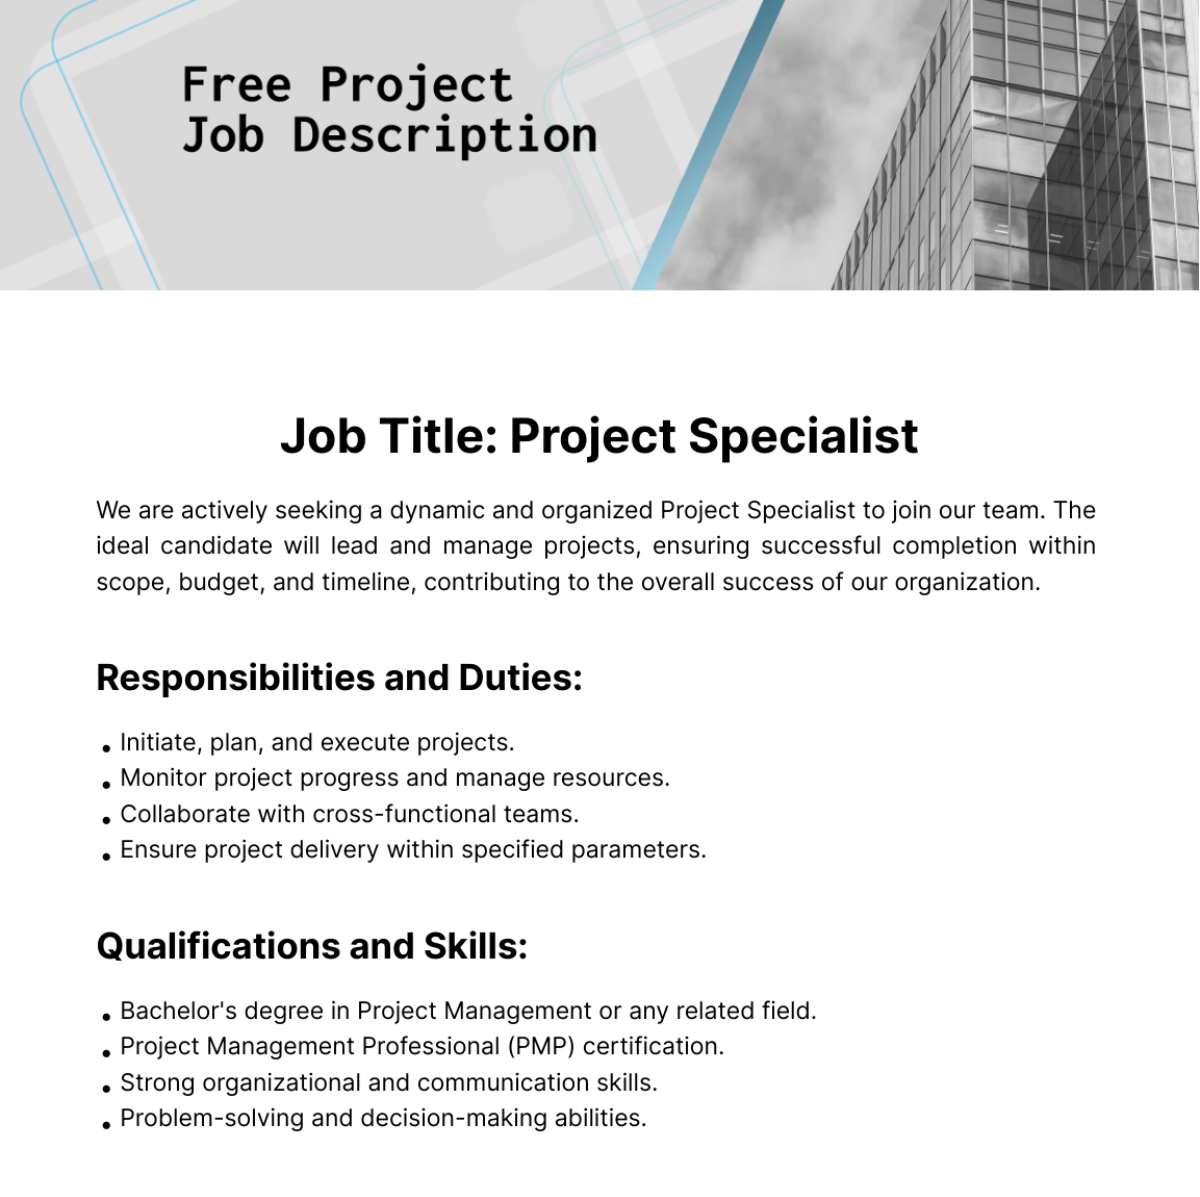 Free Project Job Description Template